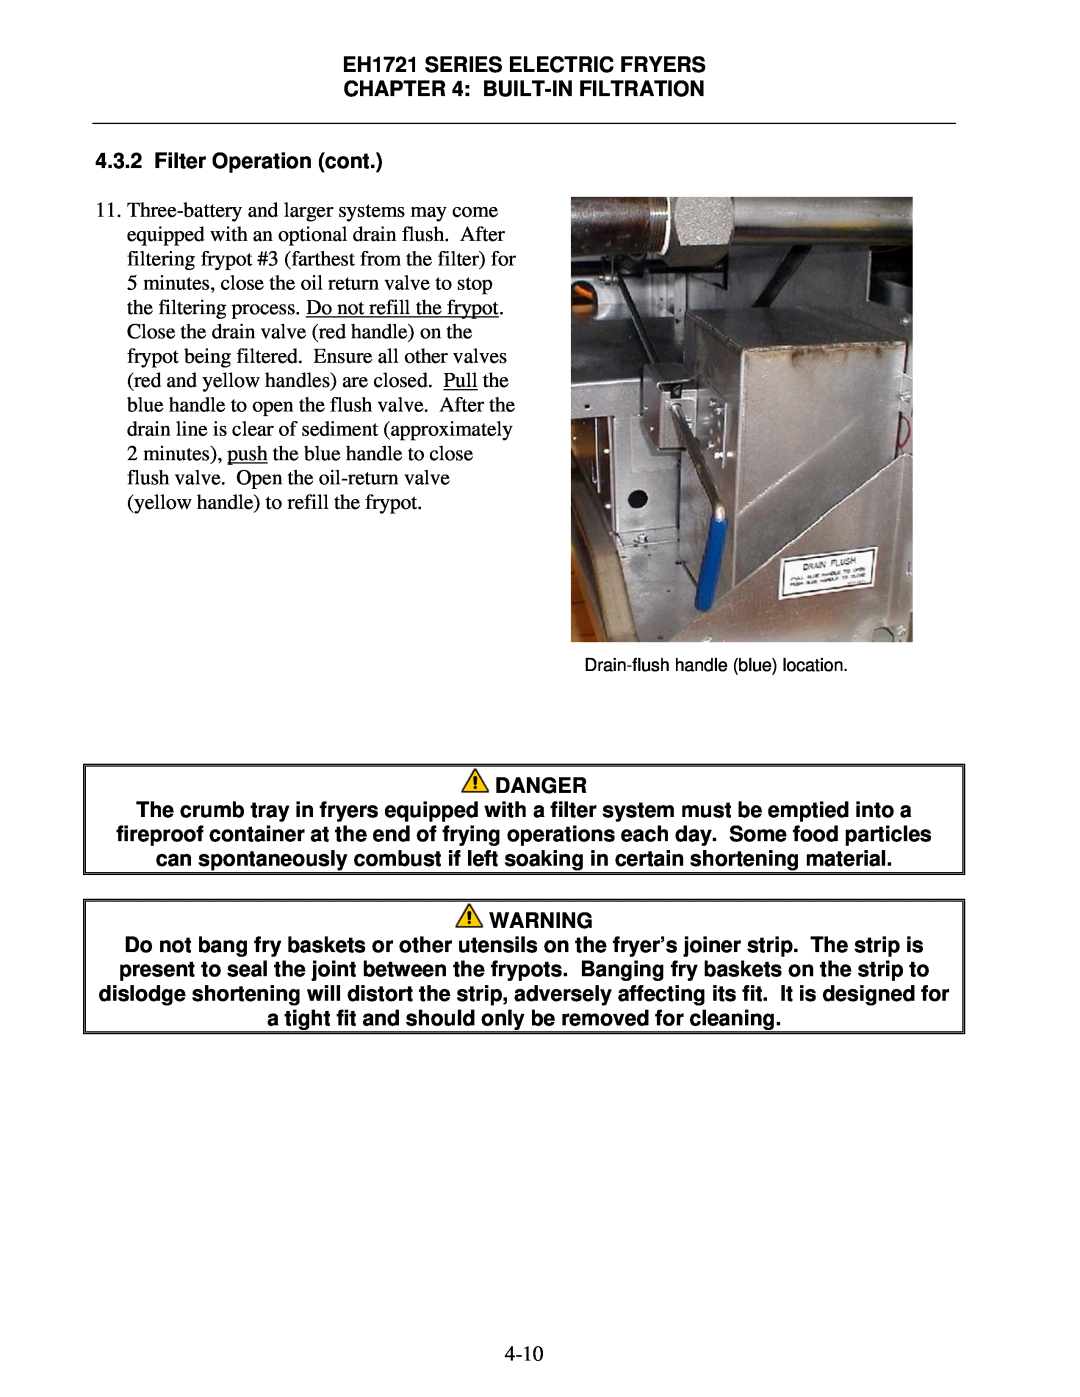 Frymaster FPH1721, BIH1721 operation manual 4-10 